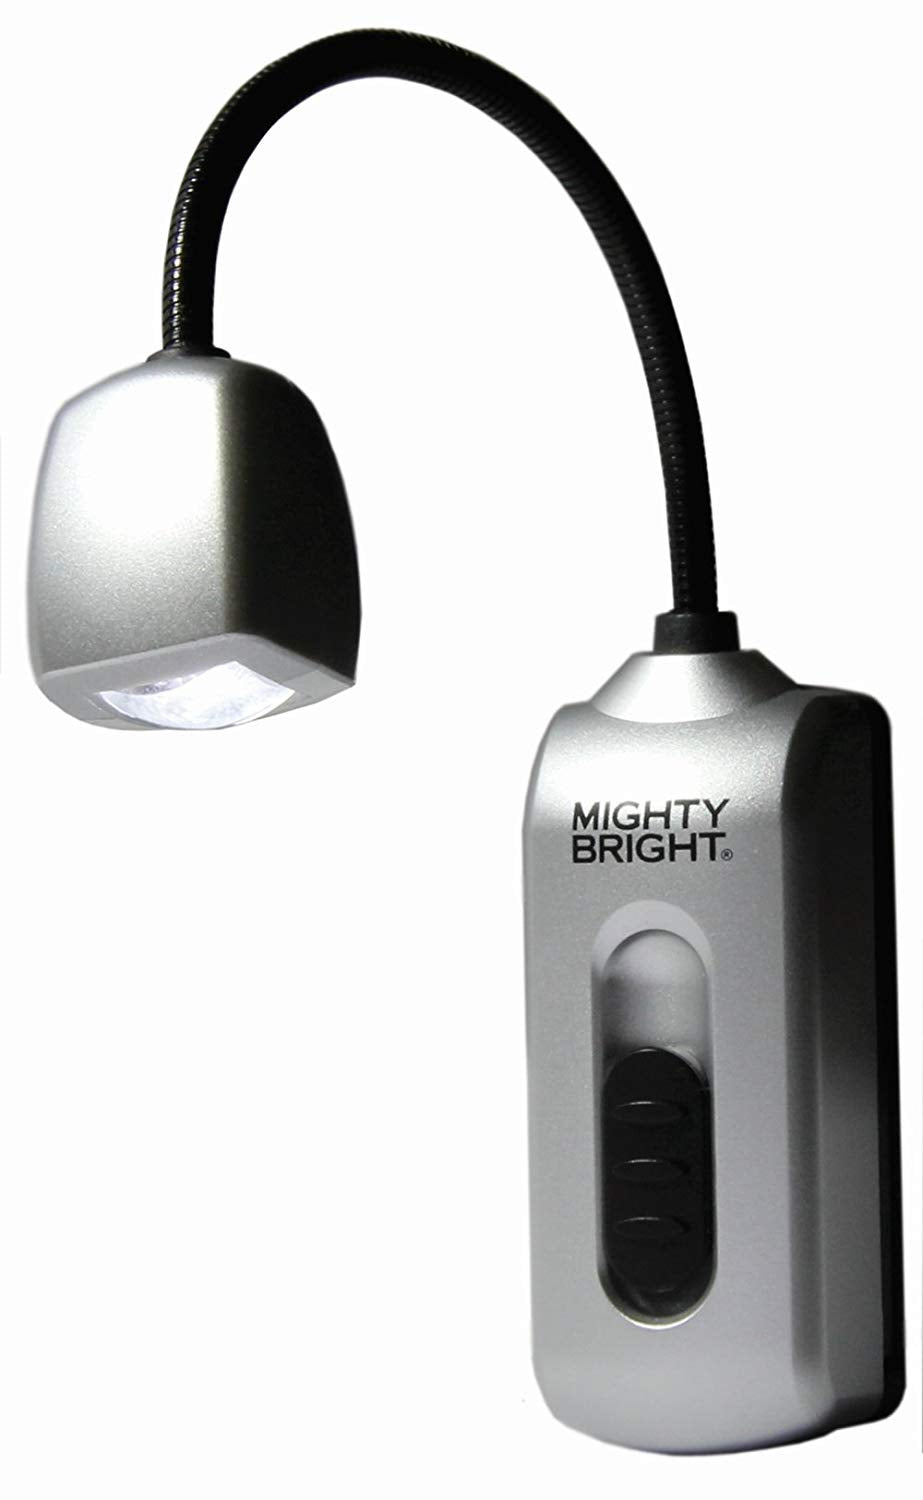 Sewing machine lights: LED light // Price, Buy at Konsew LTD, UK